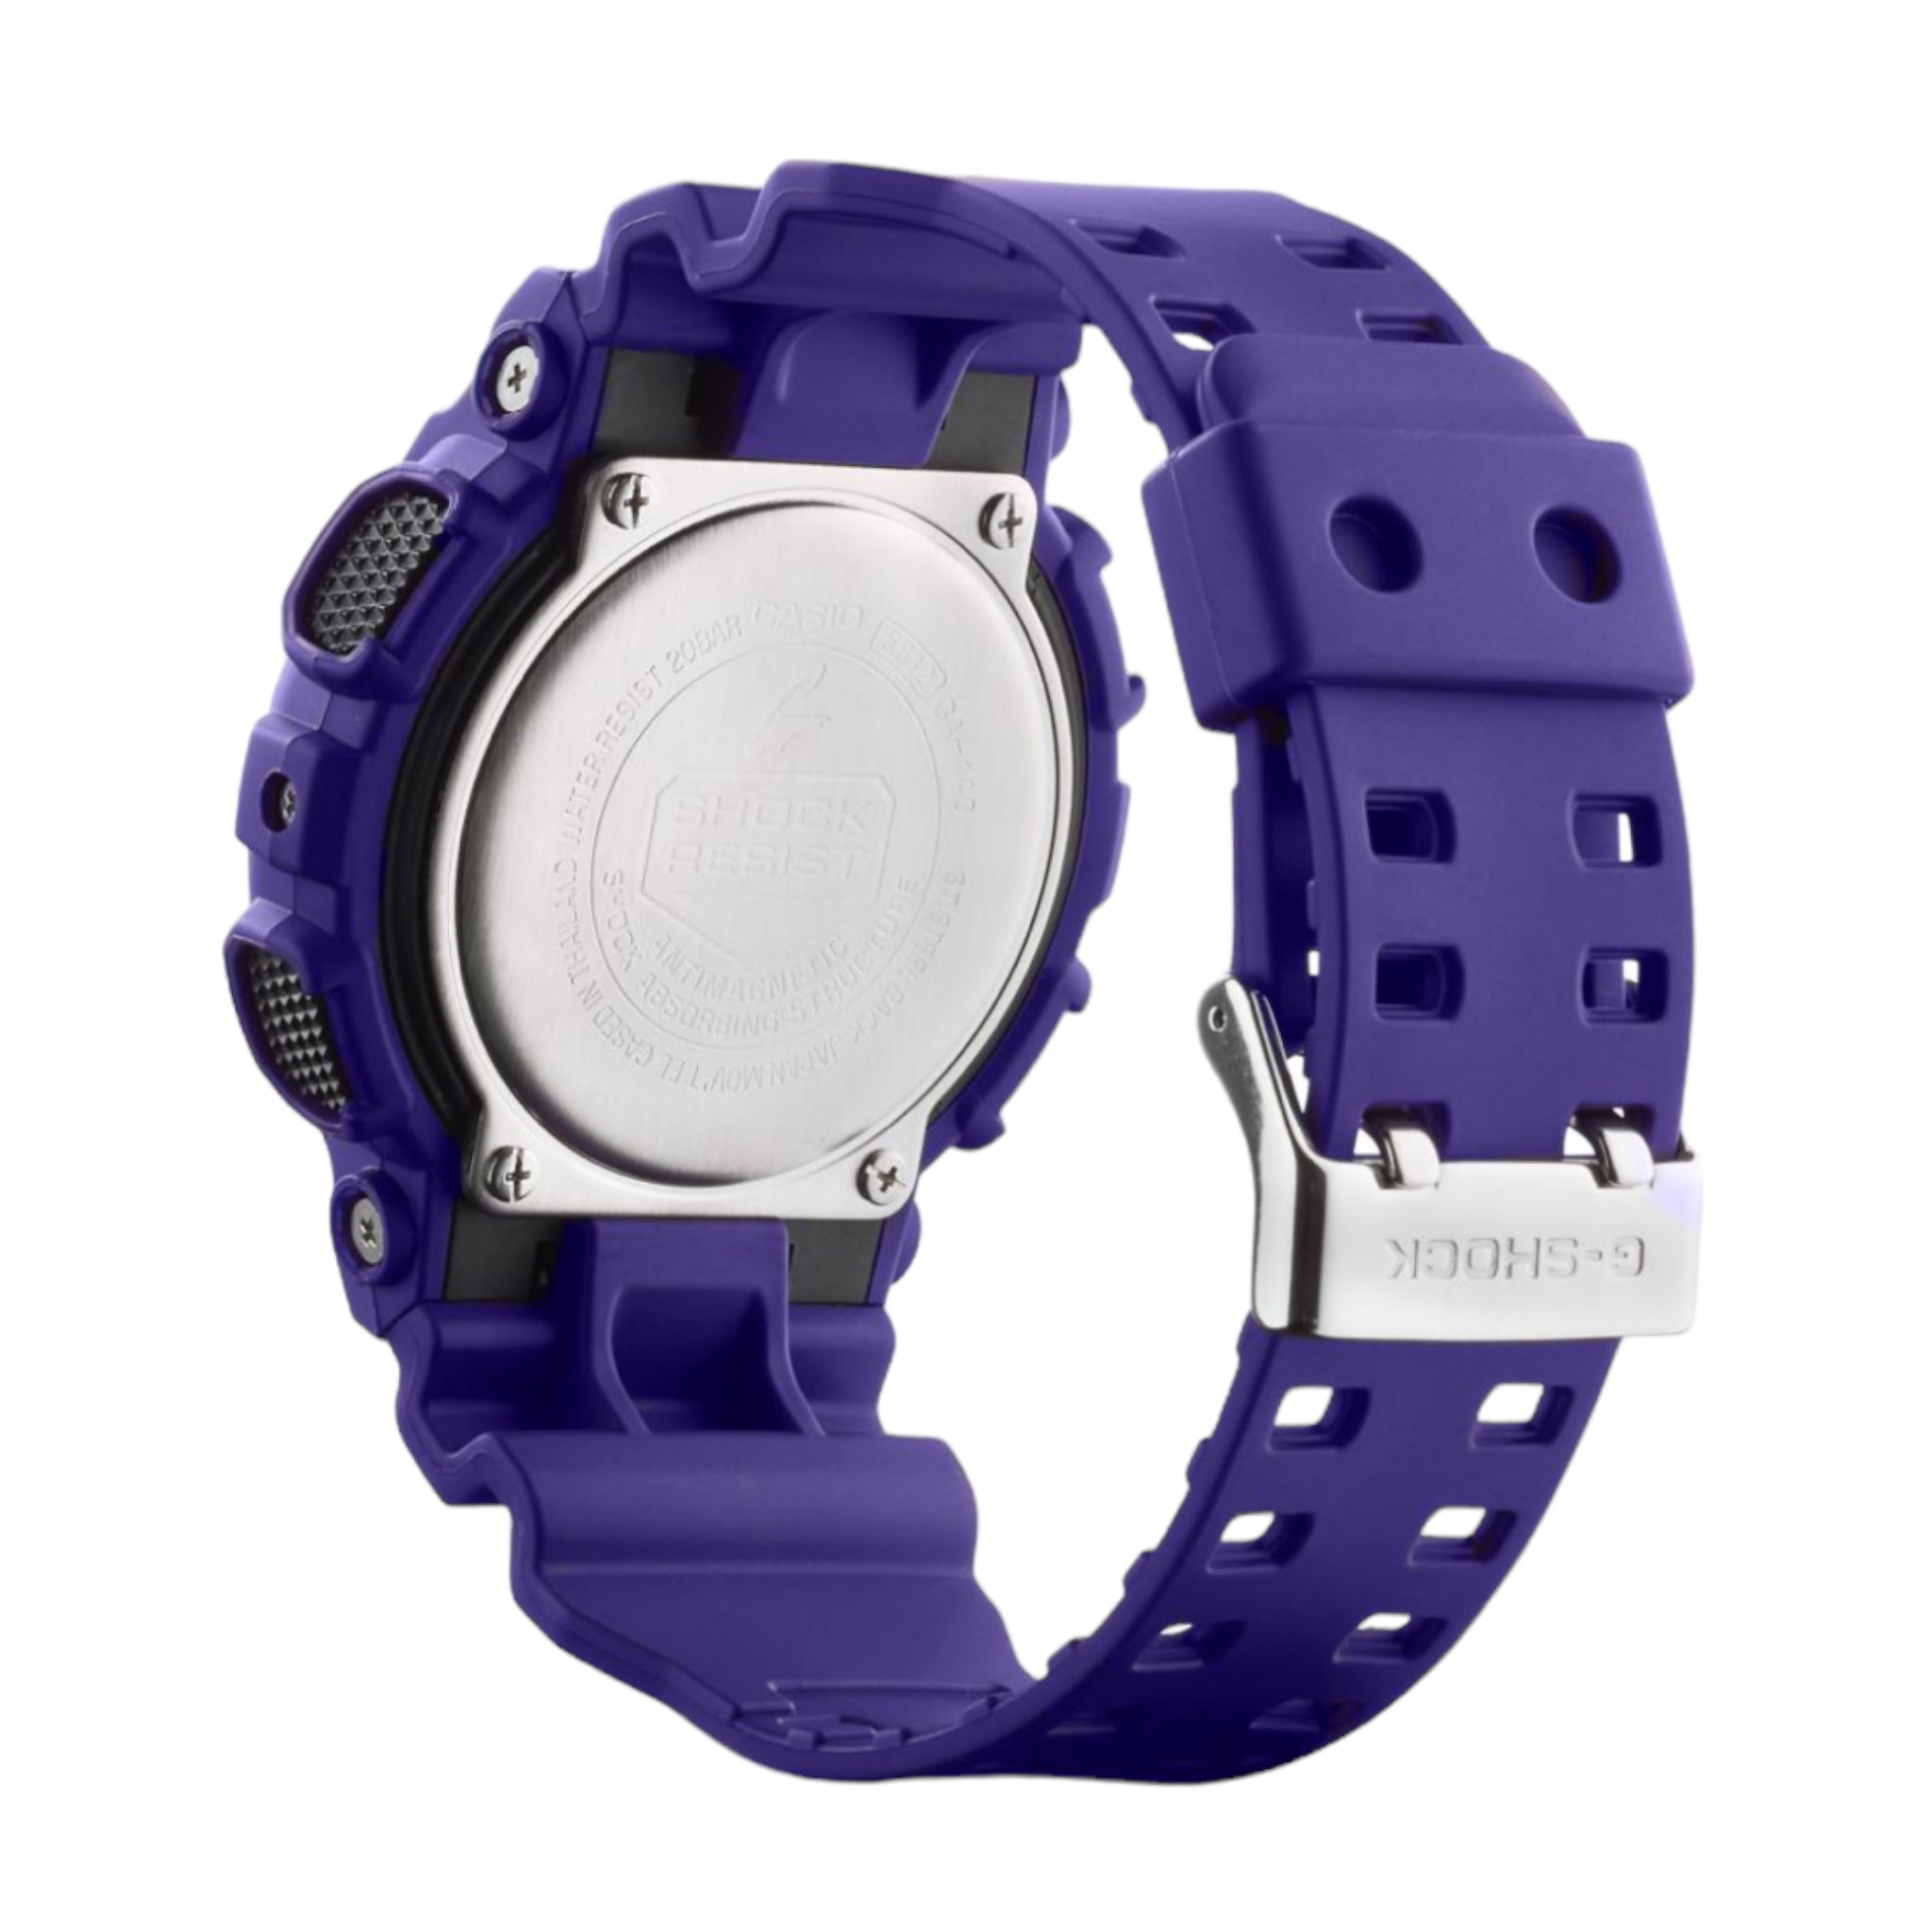 Casio G-Shock GA-140-6AER ​​Purple Watch